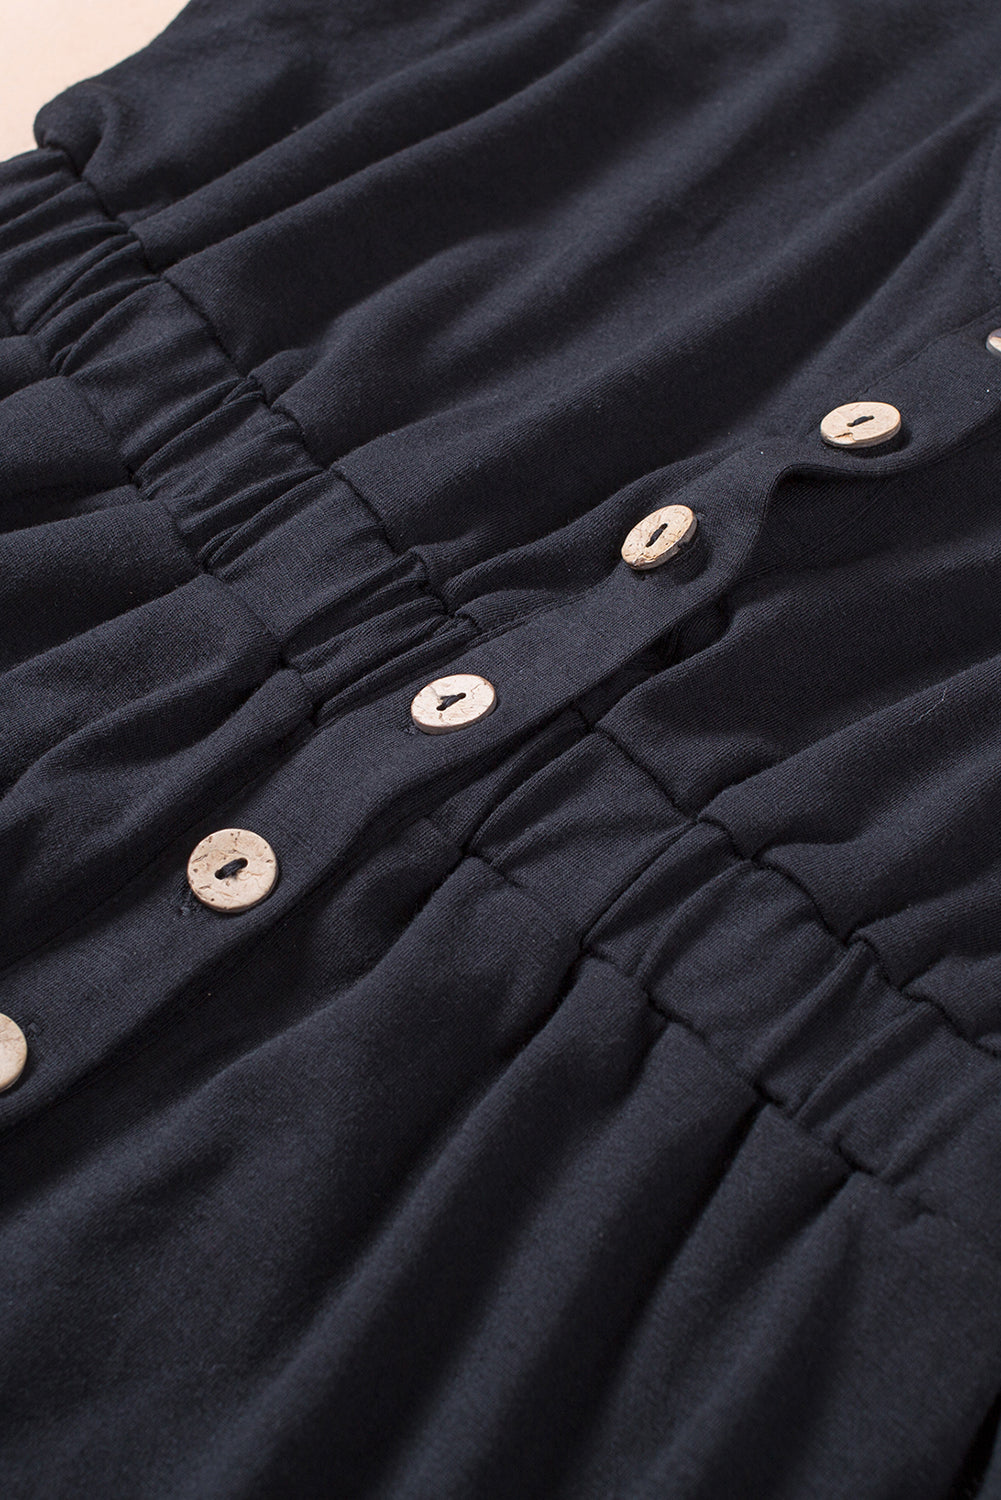 Button Front Shirred Waist Casual Tank Summer Black Dress